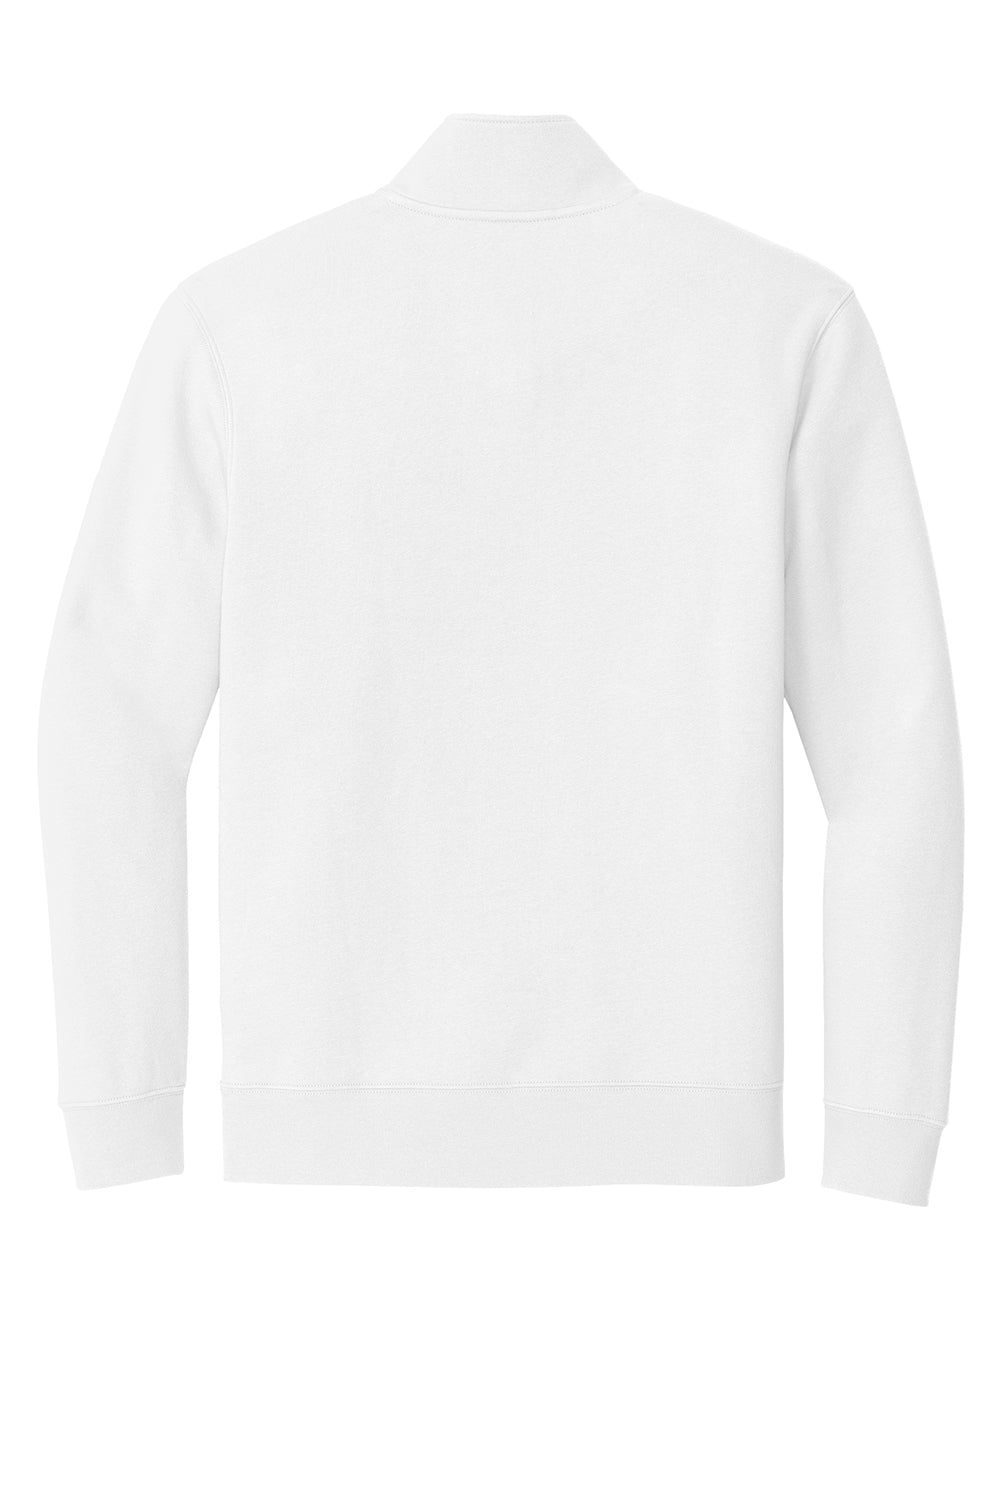 Nike NKDX6718 Mens Club Fleece 1/4 Zip Sweatshirt White Flat Back